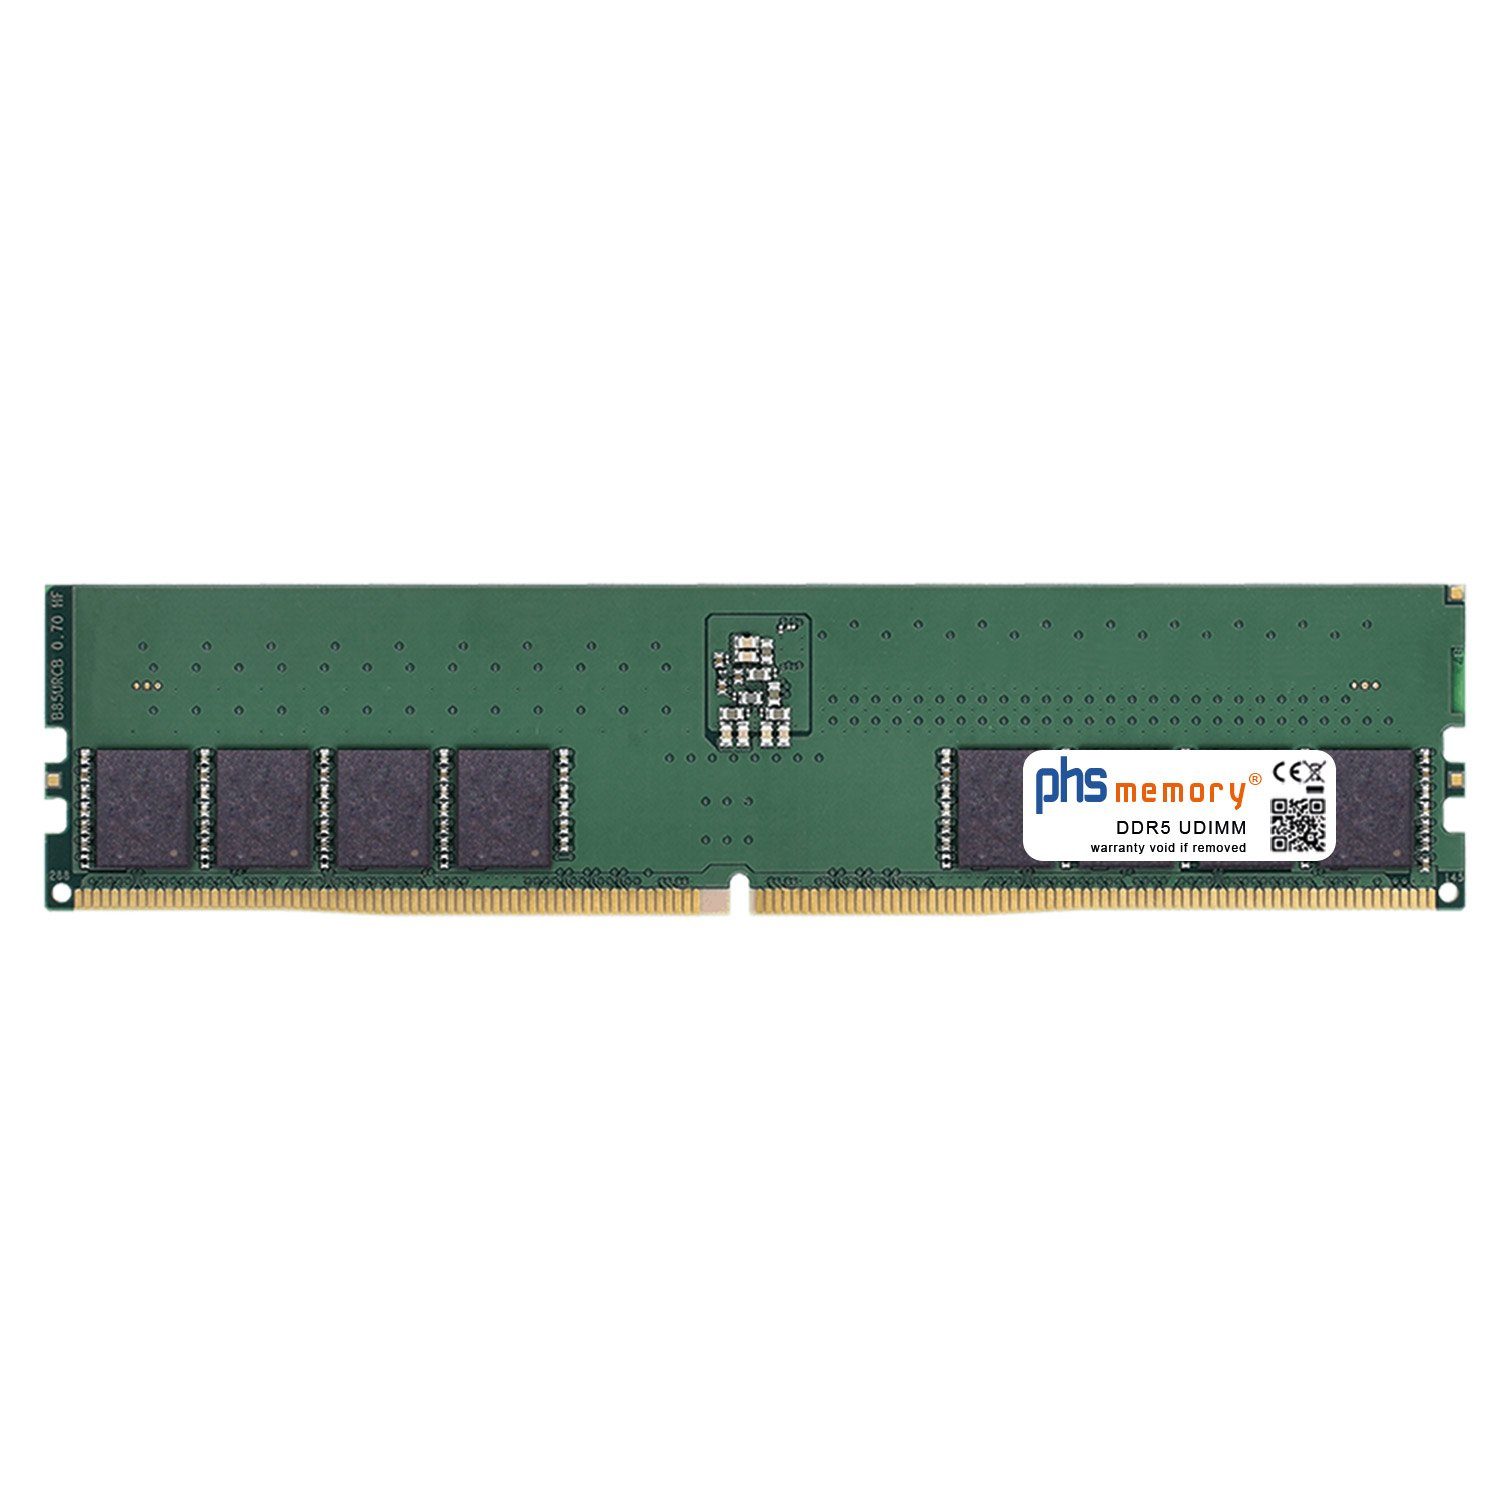 PHS-memory RAM für Captiva Highend Gaming I67-407 Arbeitsspeicher